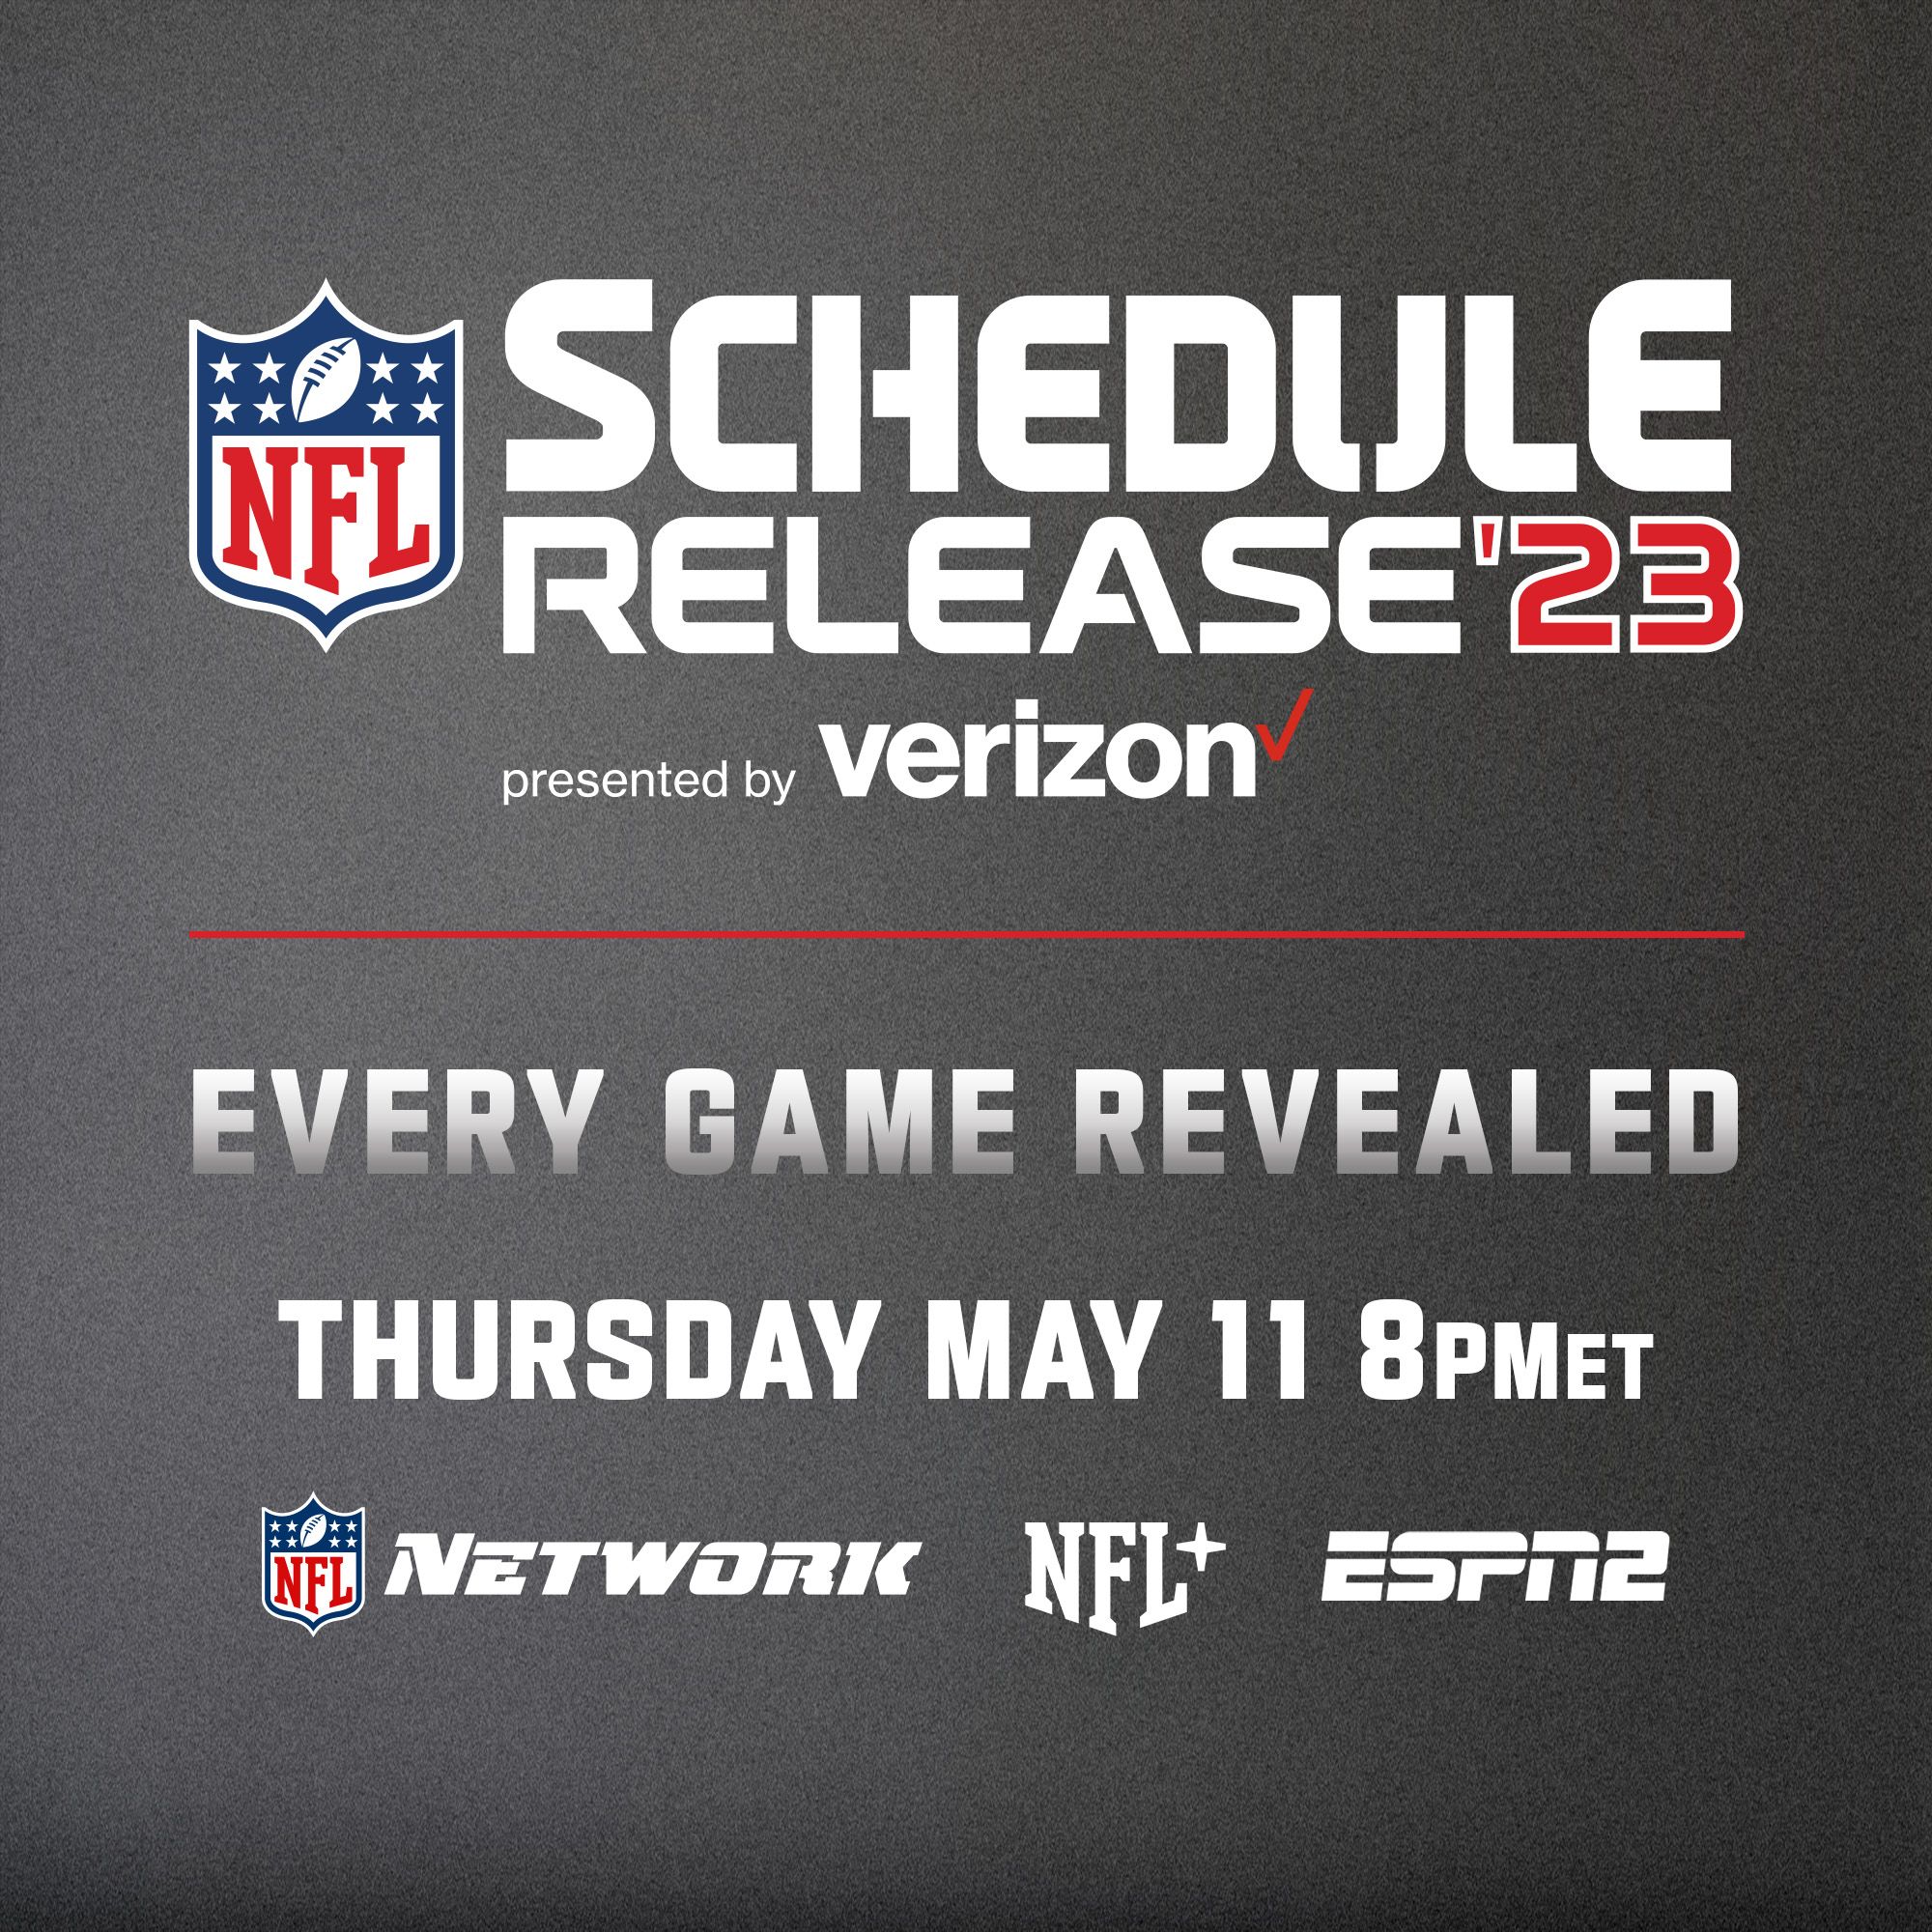 Prime Video Starts NFL Game Coverage Thursday Night – NFL